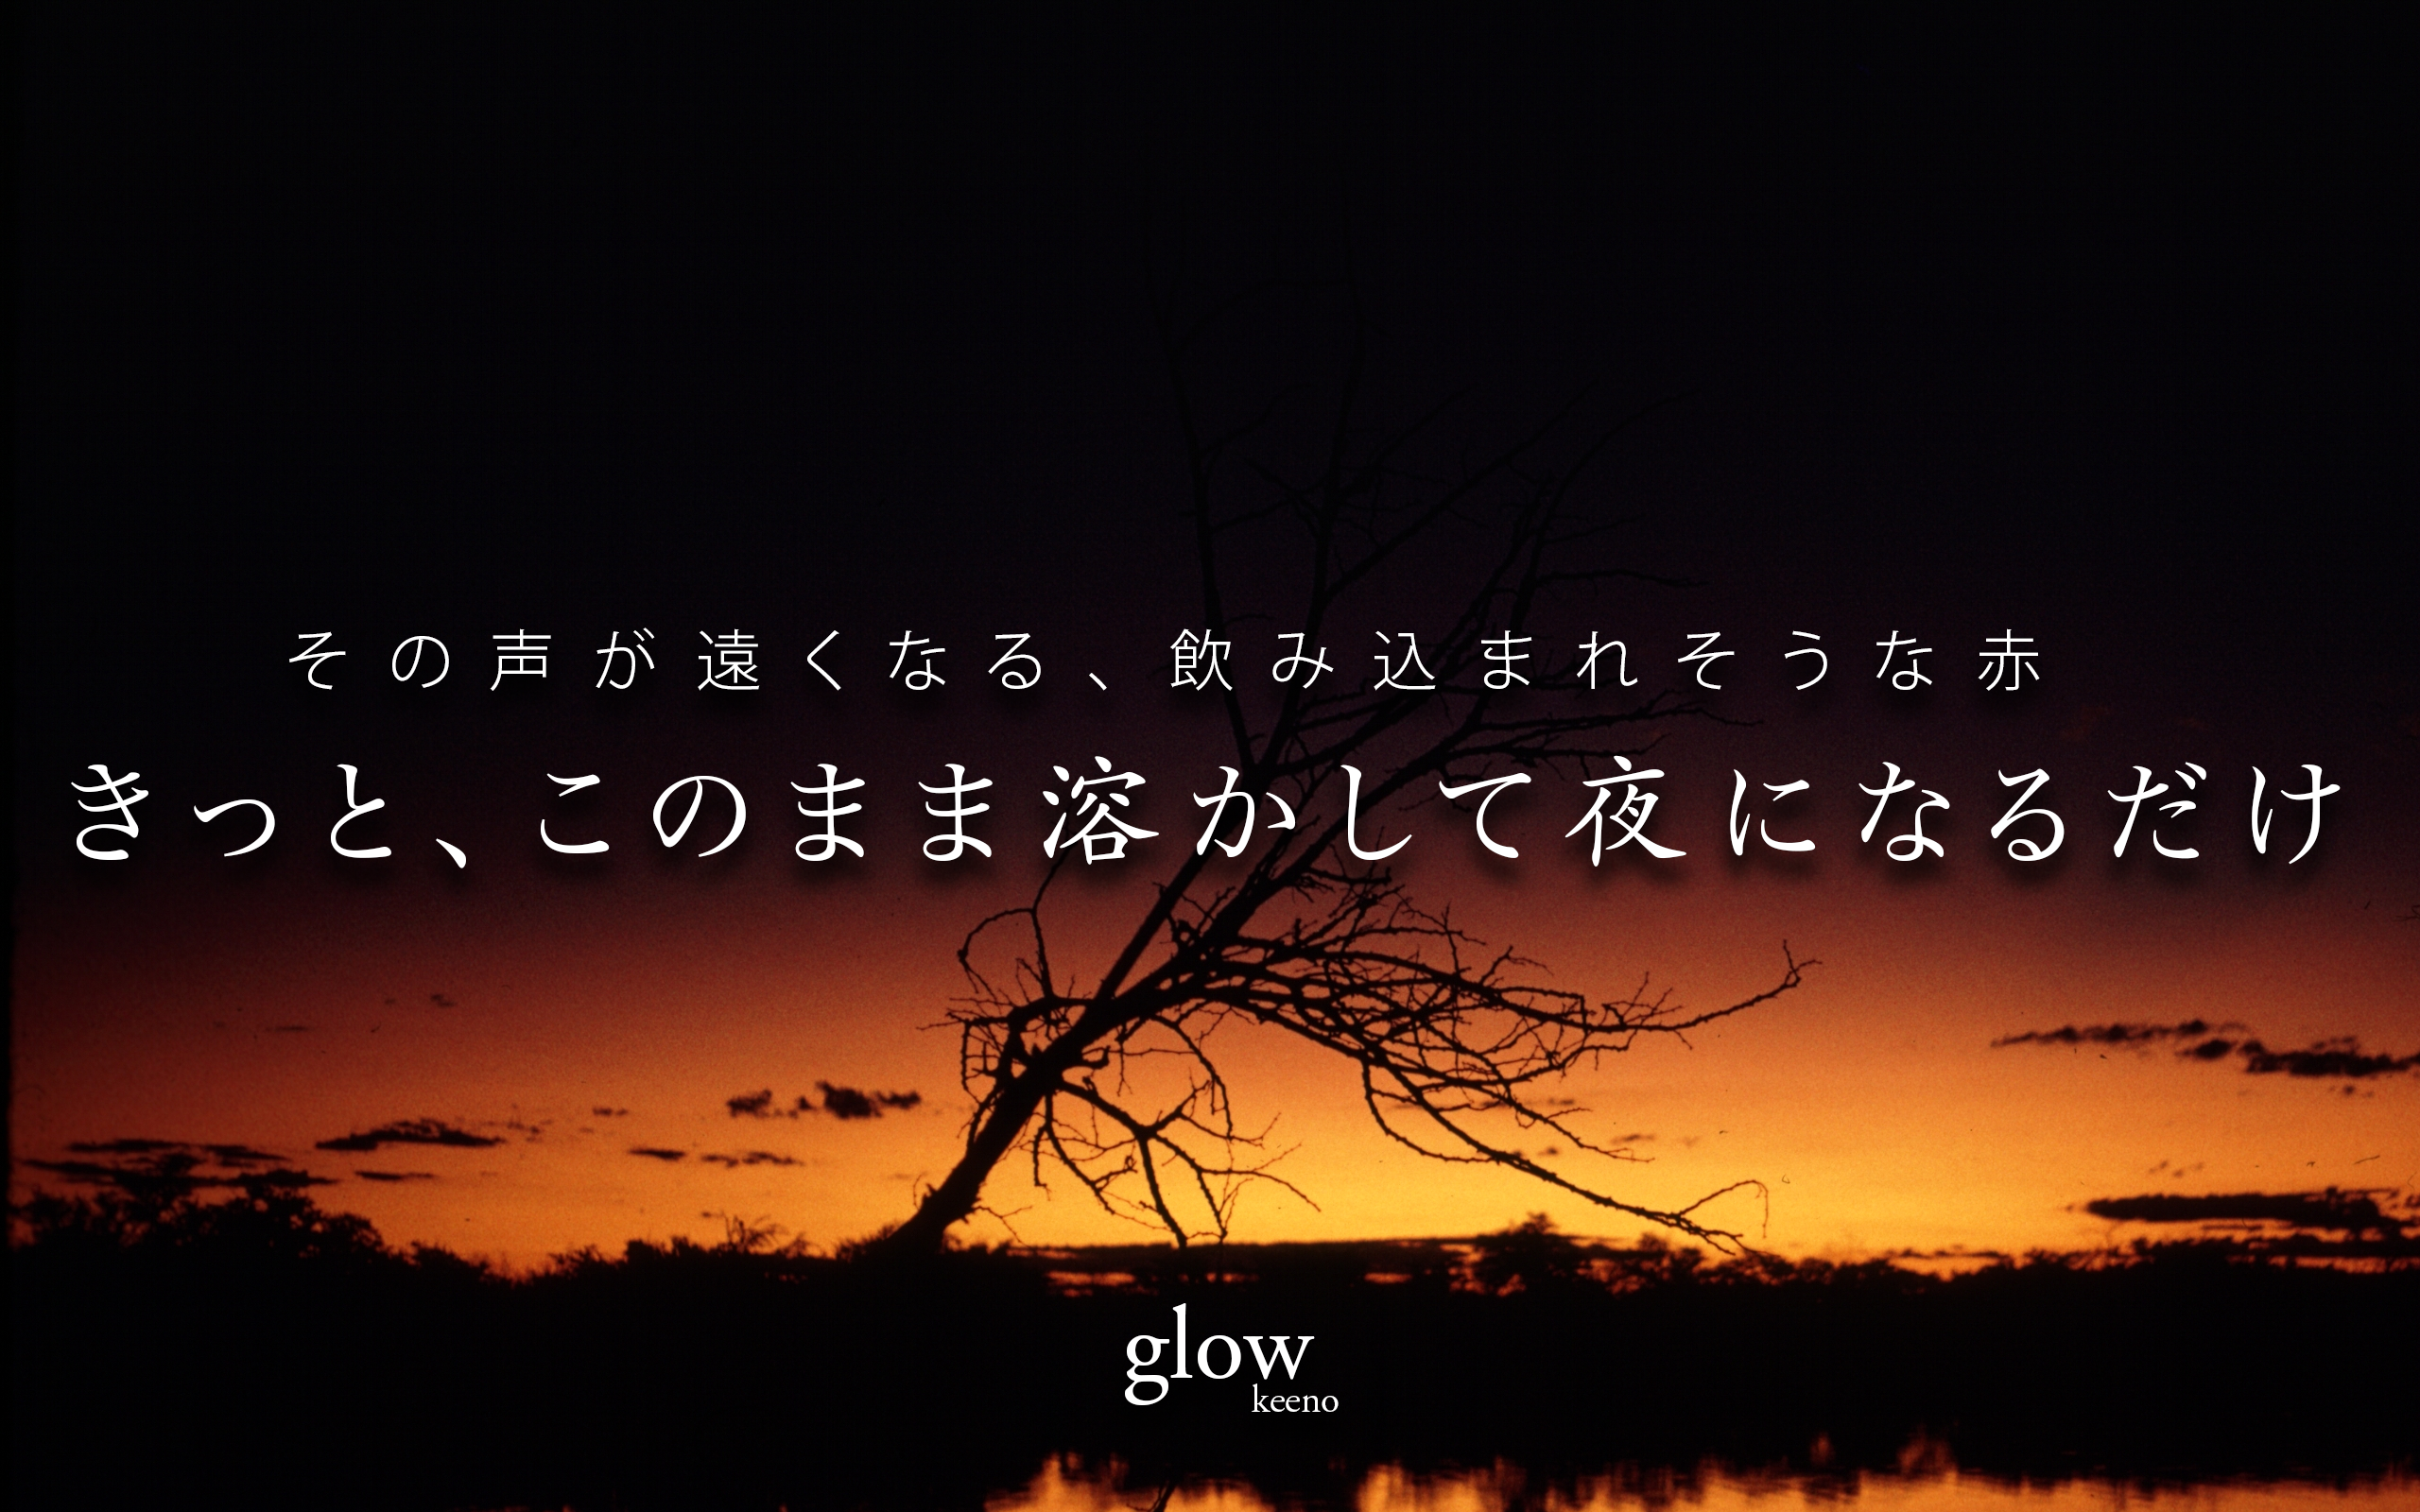 glow-jp